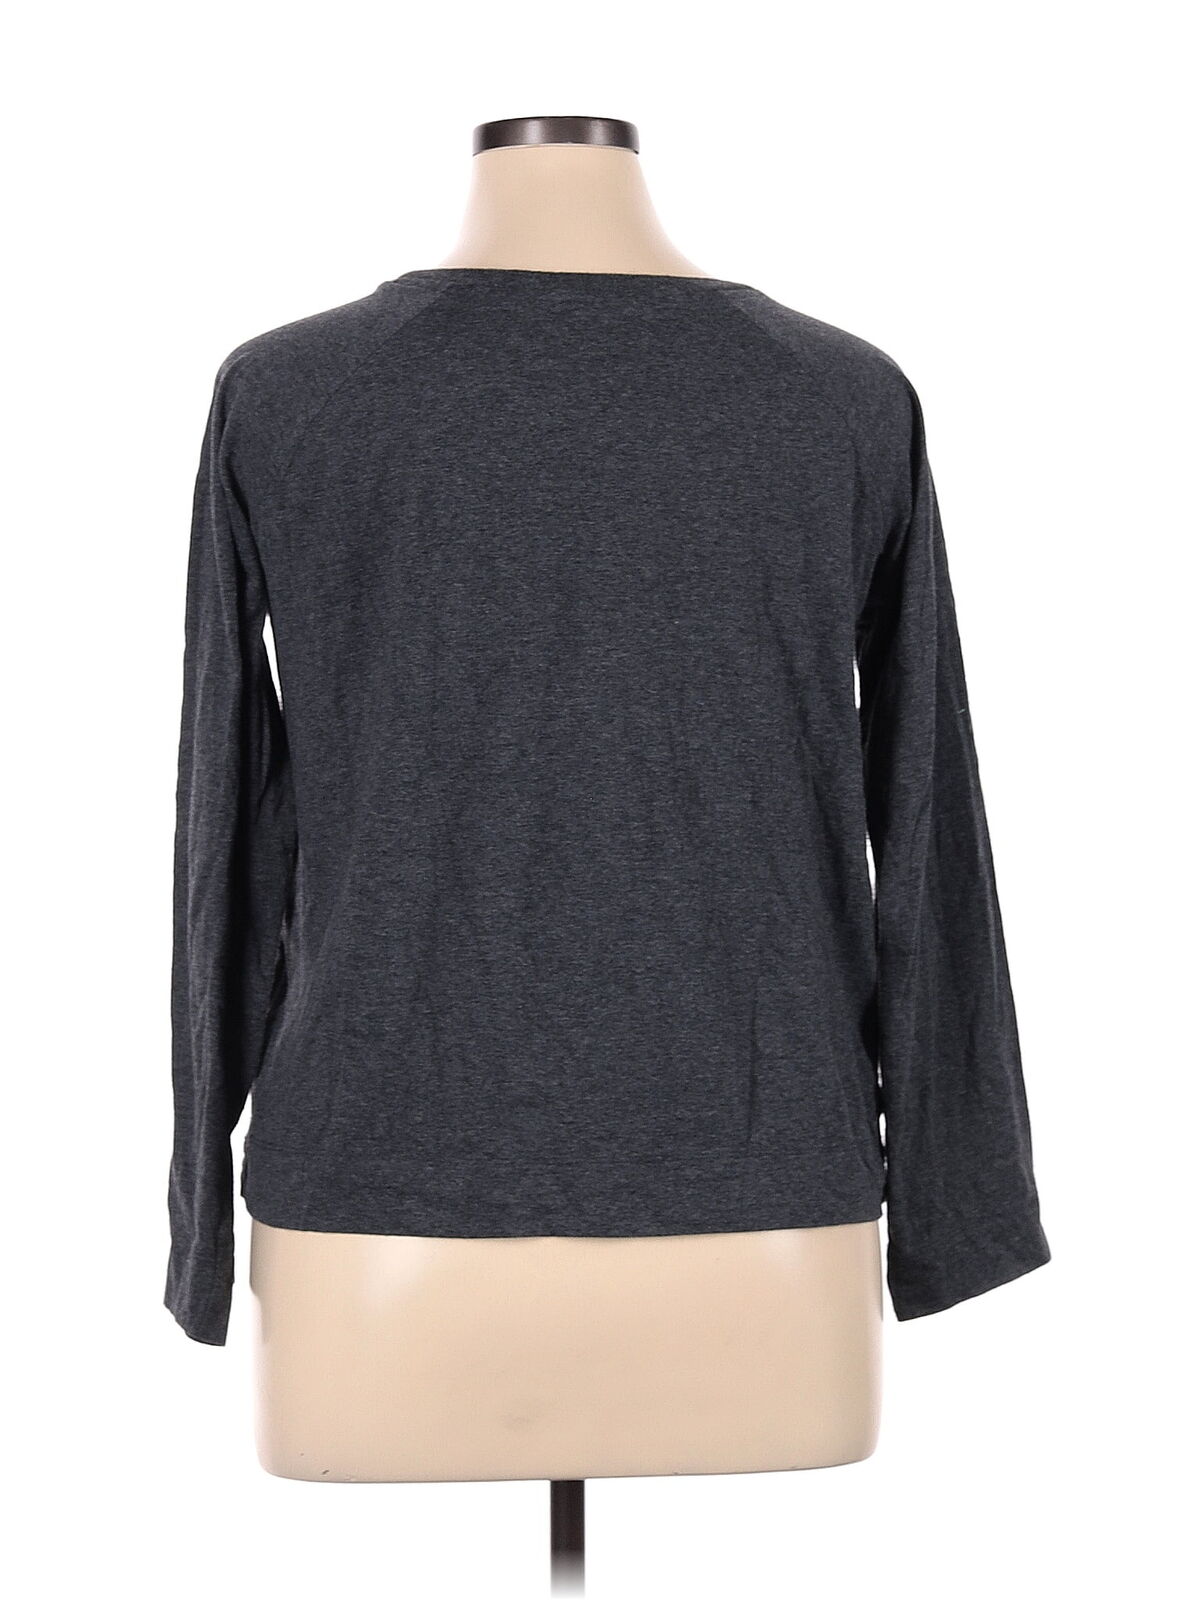 Tommy Hilfiger Women Gray Long Sleeve T-Shirt XL - image 2